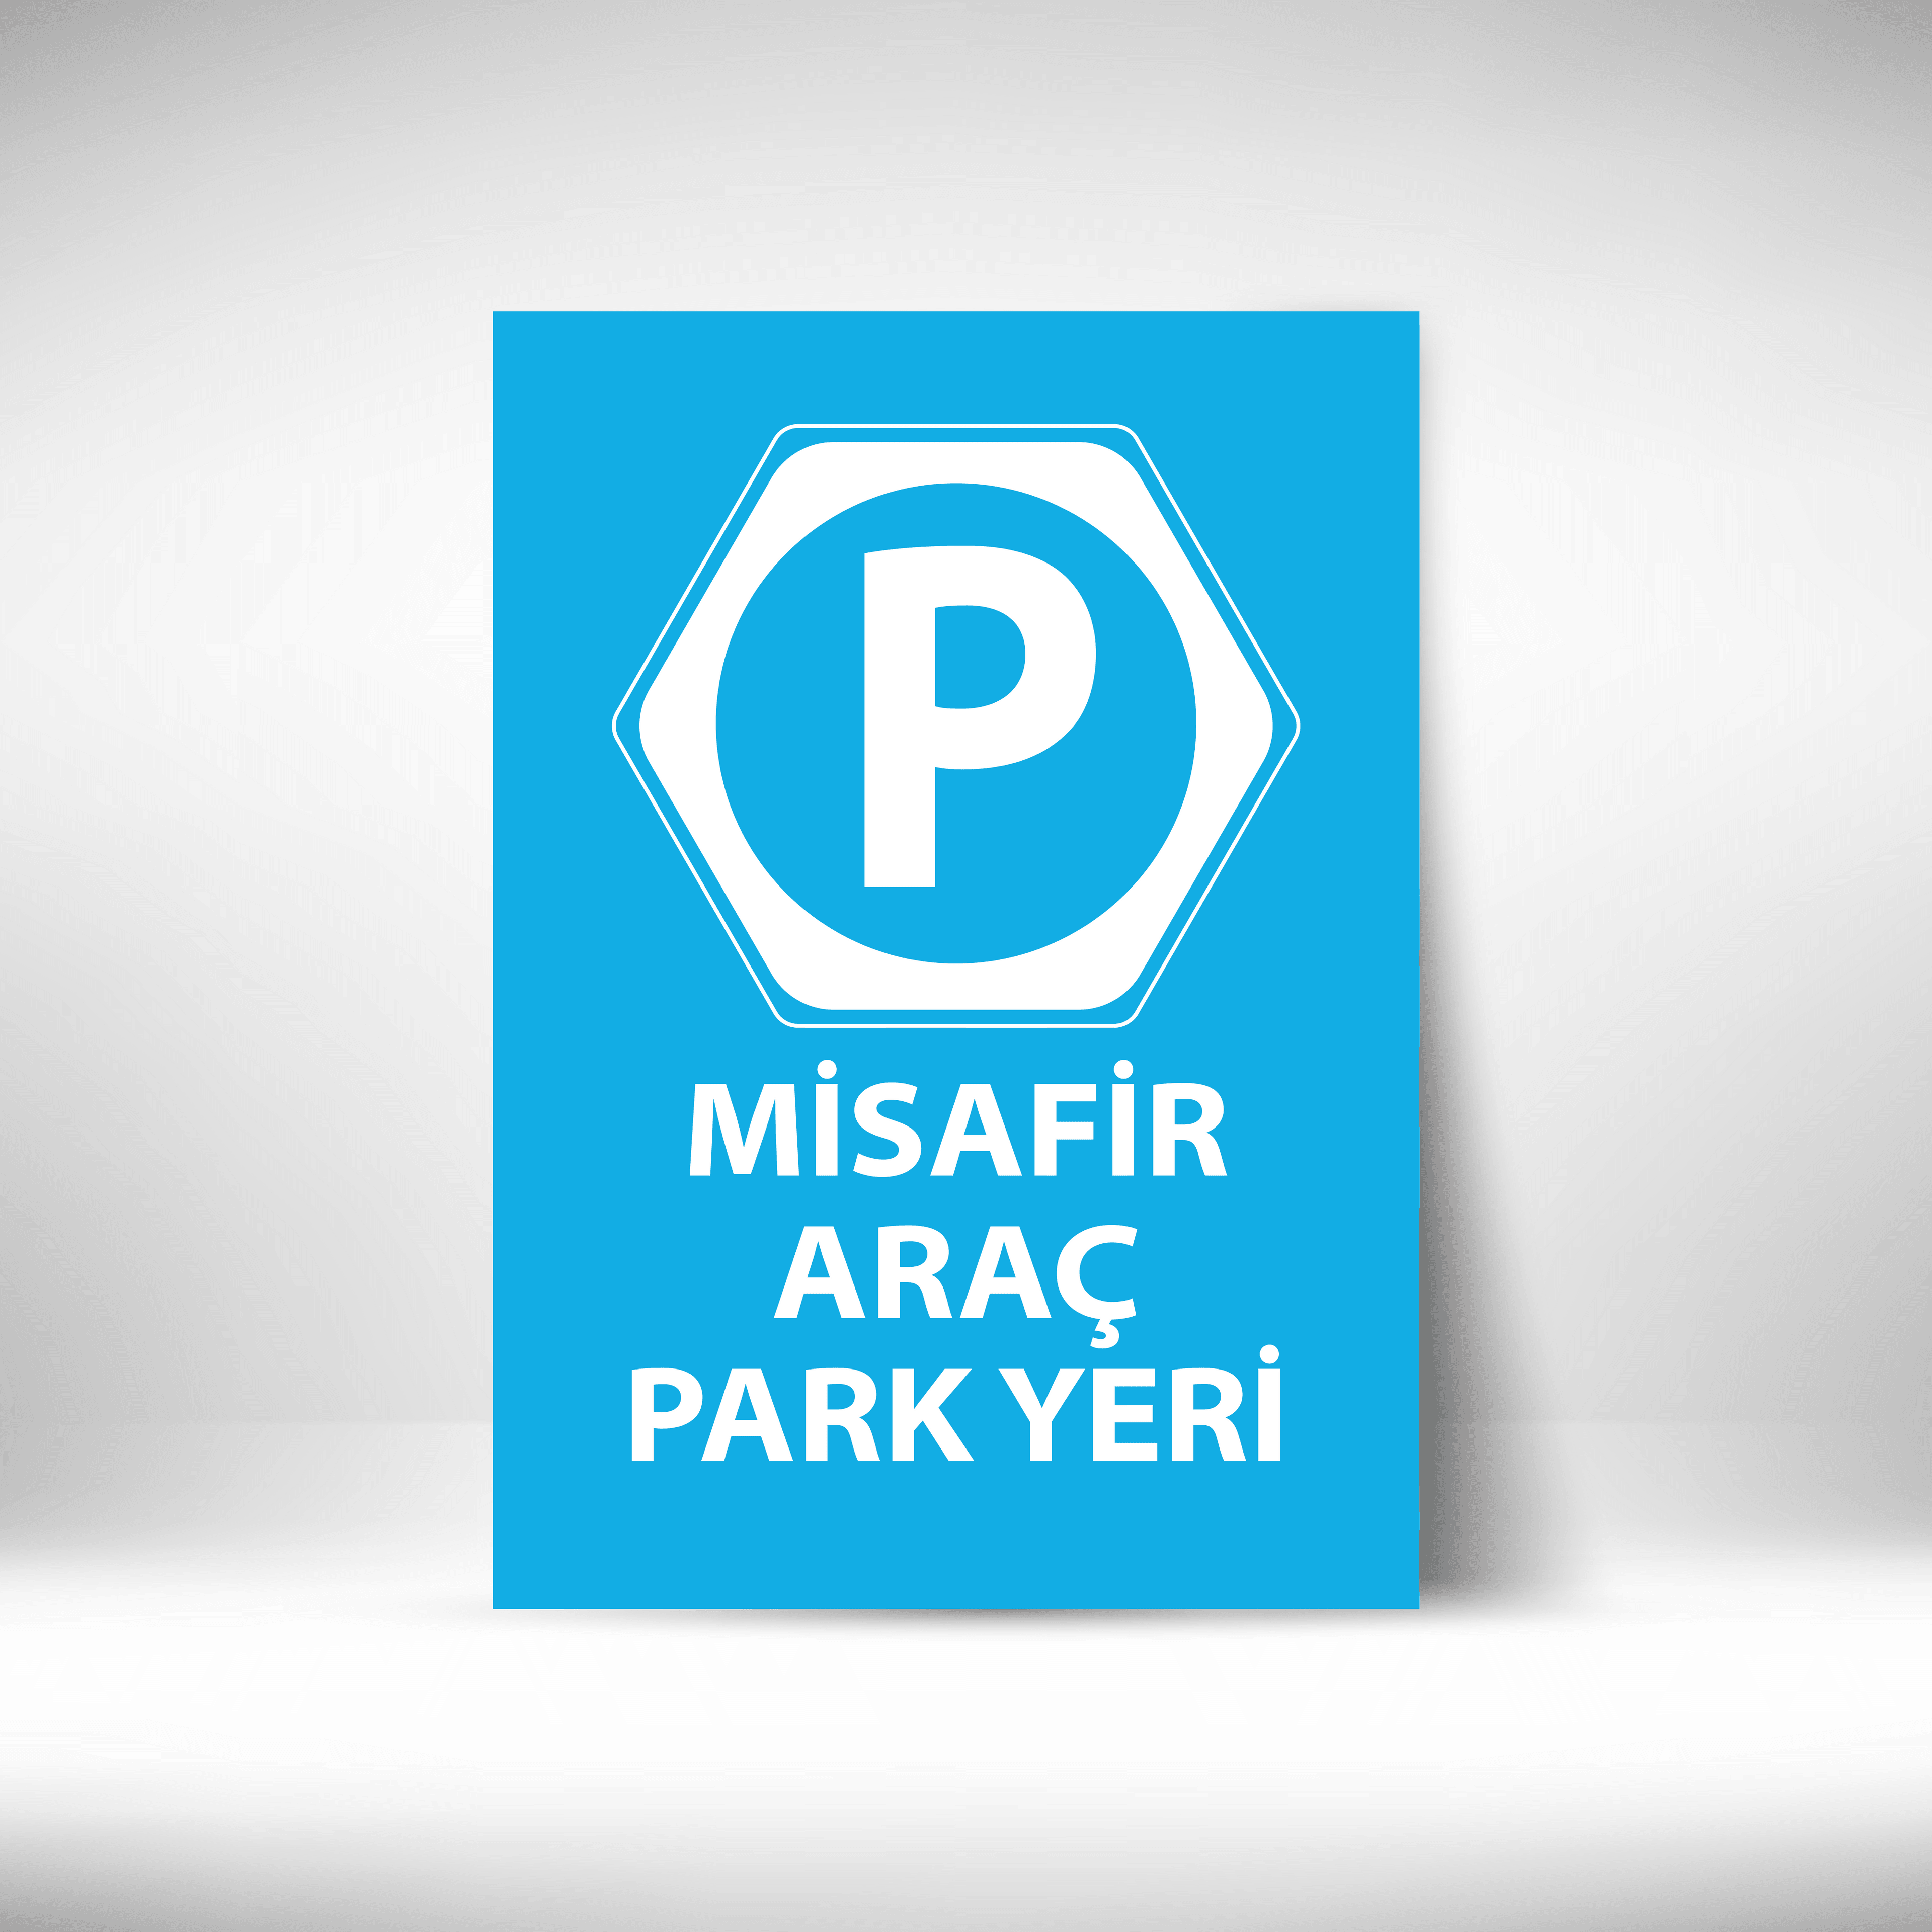 Misafir Araç Park Yeri image